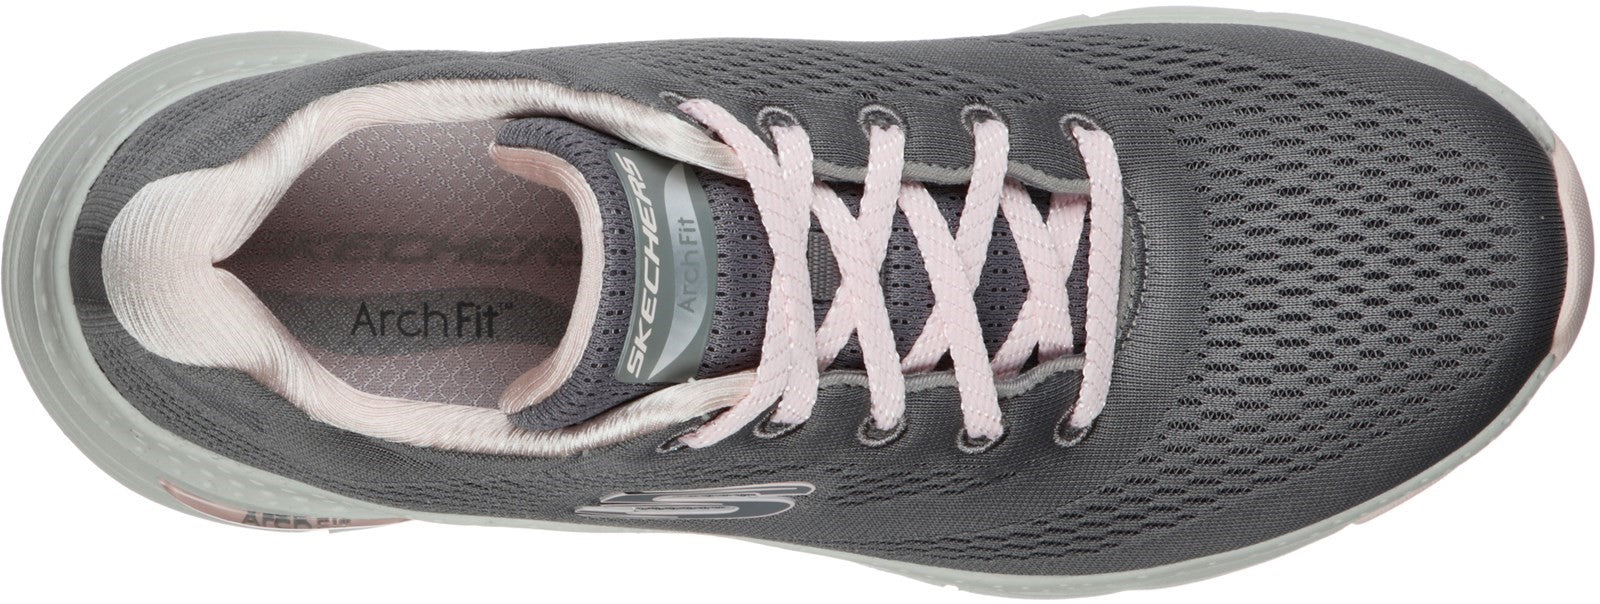 Skechers Women's Arch FIT - Sunny Outlook Shoe, Gray Knit Mesh